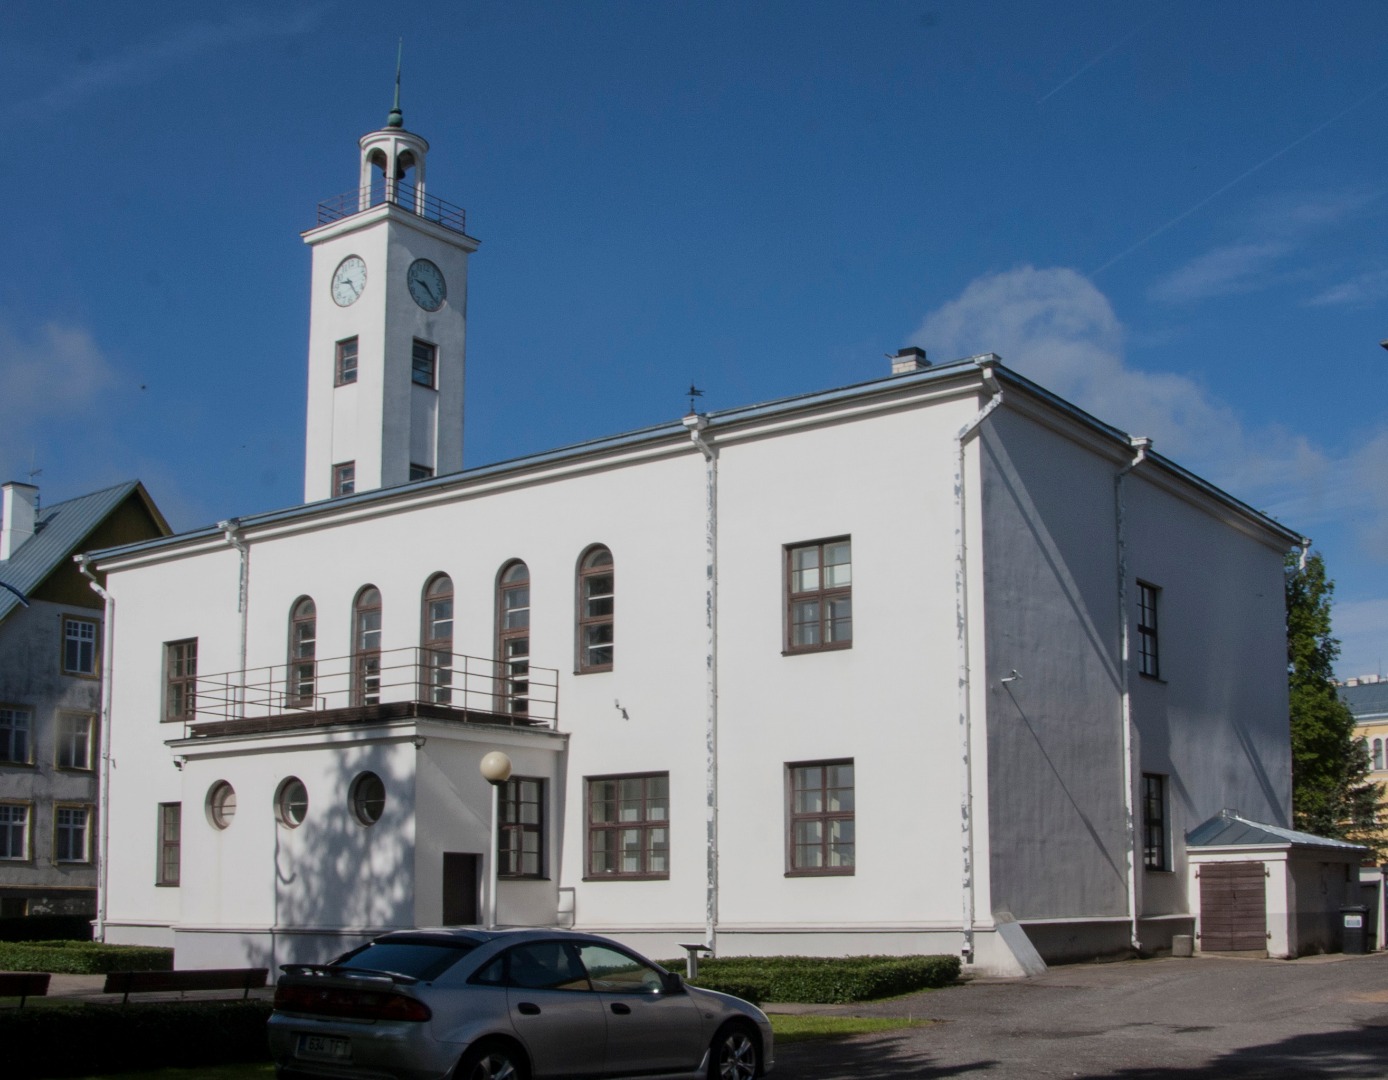 Viljandi City Government Building. rephoto